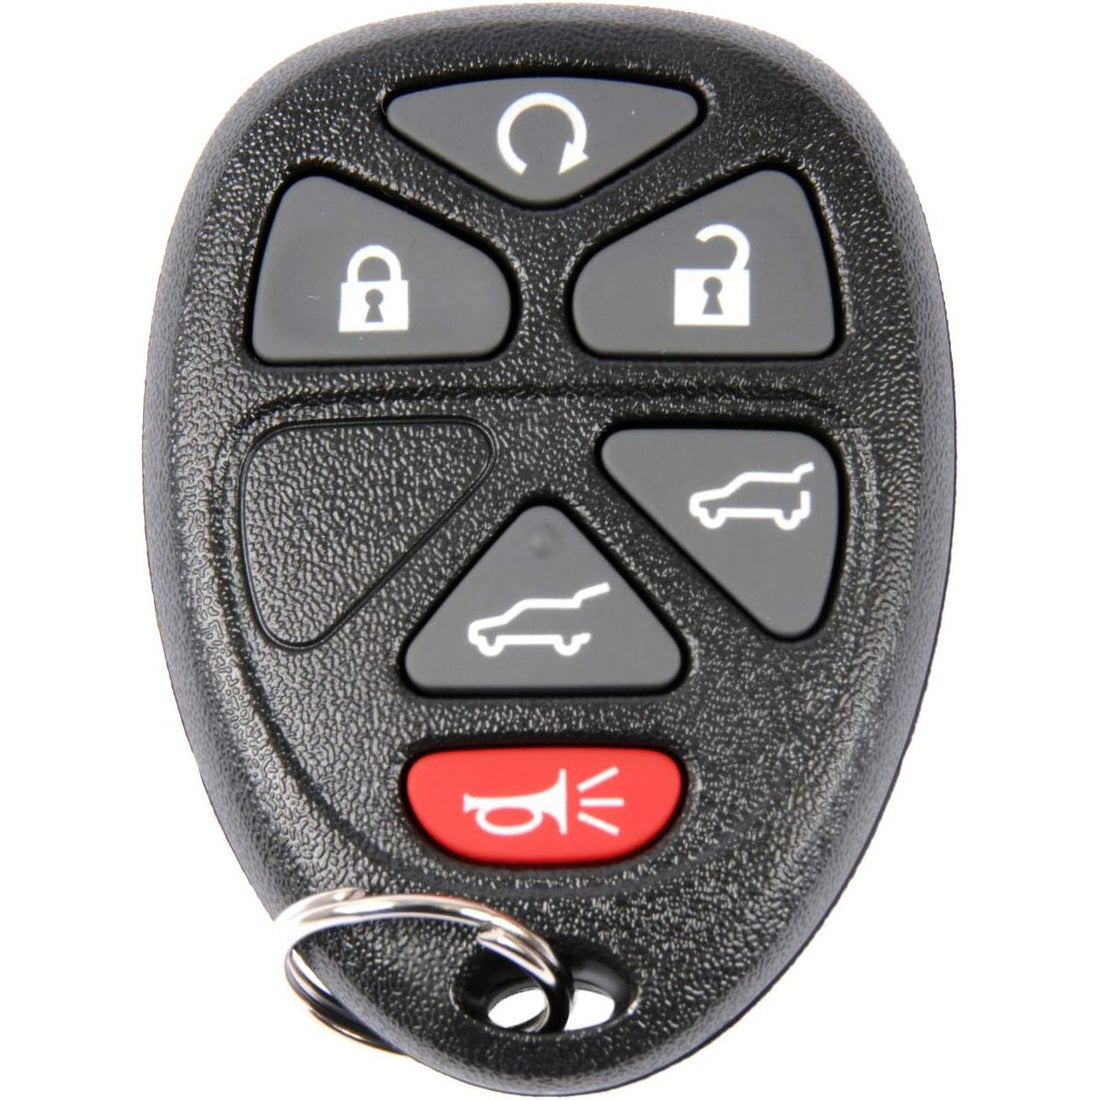 GM Genuine Parts 22951510 6 Button Keyless Entry Remote Key Fob